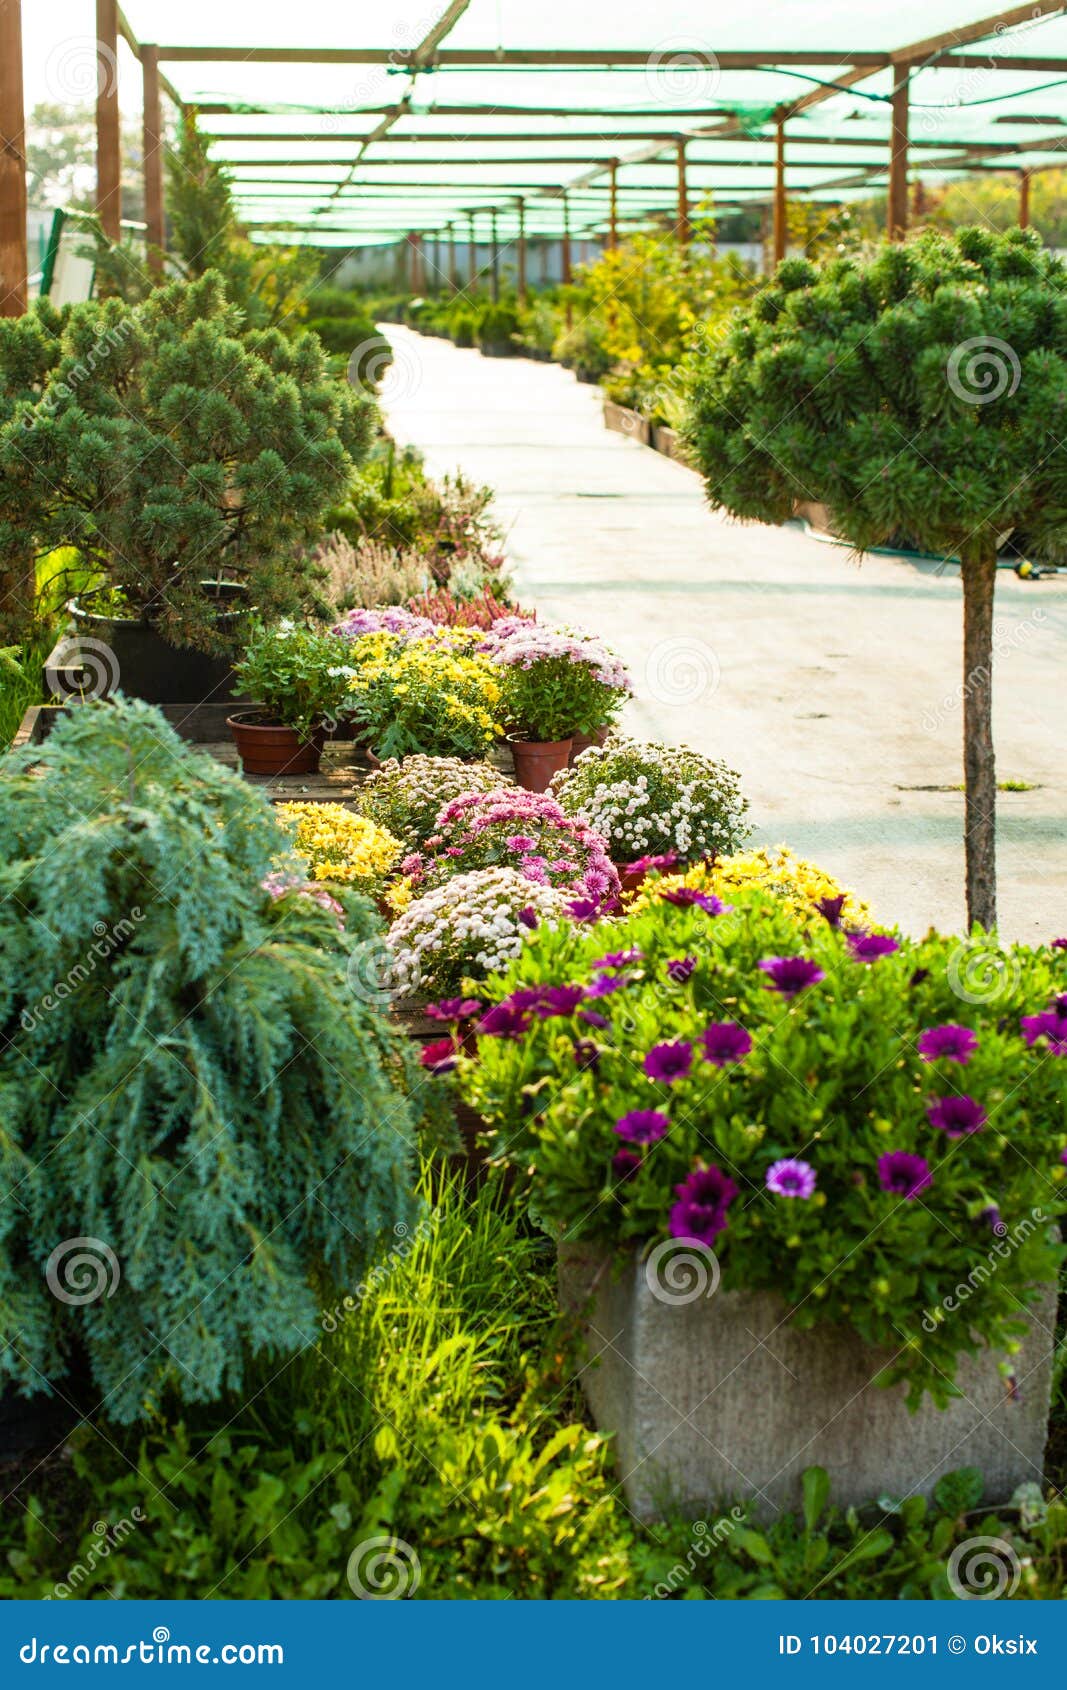 garden market outdoor stock image. image of ecology - 104027201